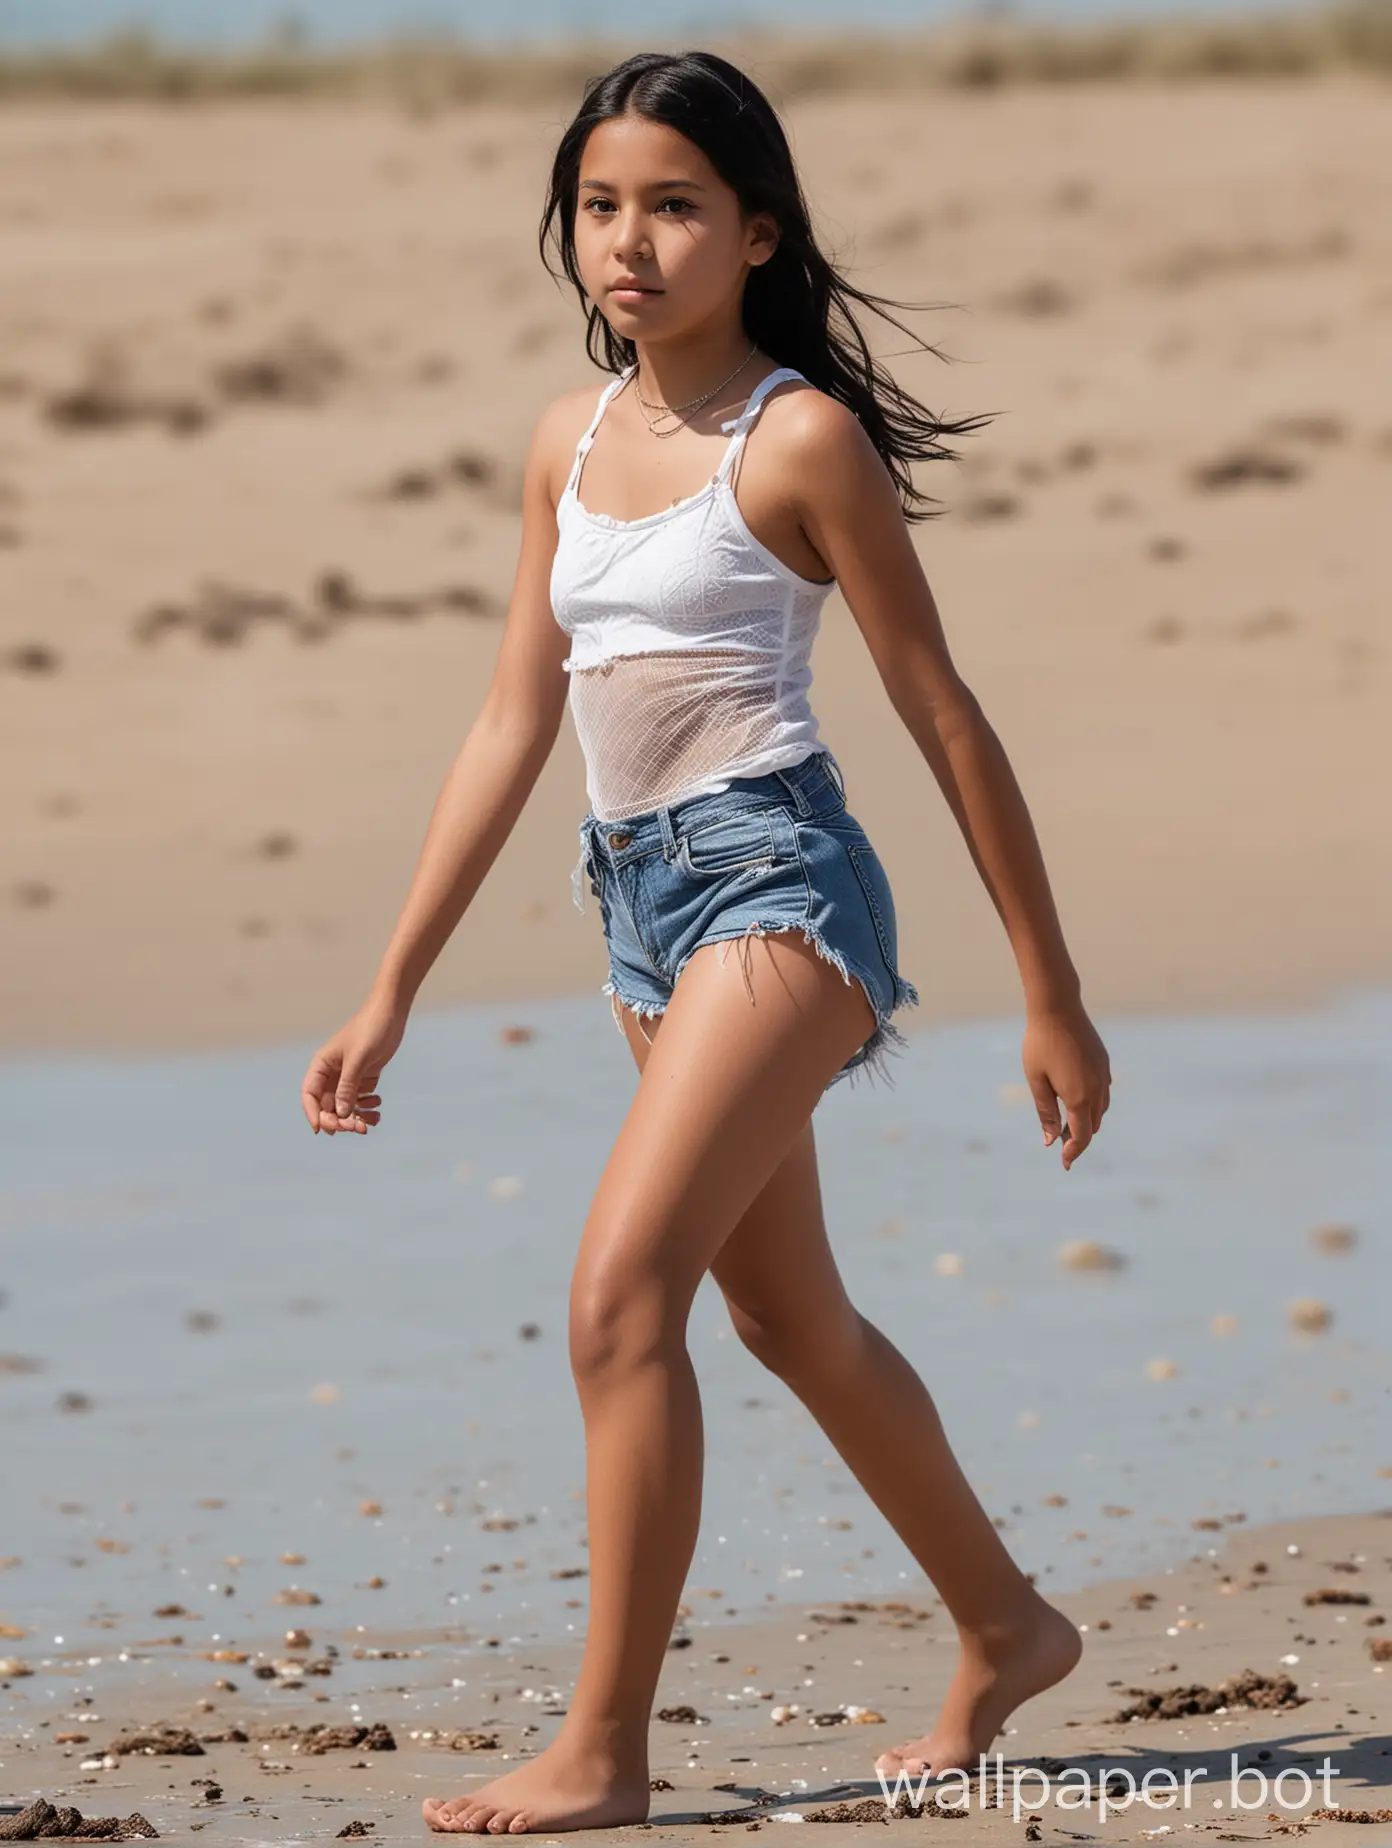 Native-American-Teenage-Girl-Walking-on-Beach-in-Denim-Shorts-and-Fishnet-Tank-Top